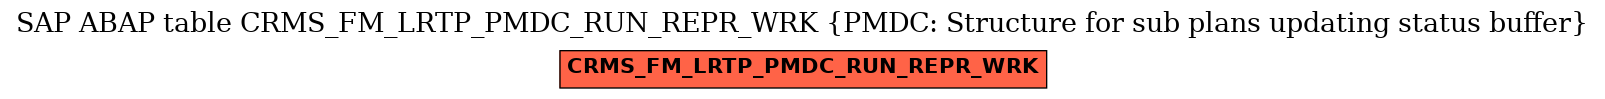 E-R Diagram for table CRMS_FM_LRTP_PMDC_RUN_REPR_WRK (PMDC: Structure for sub plans updating status buffer)